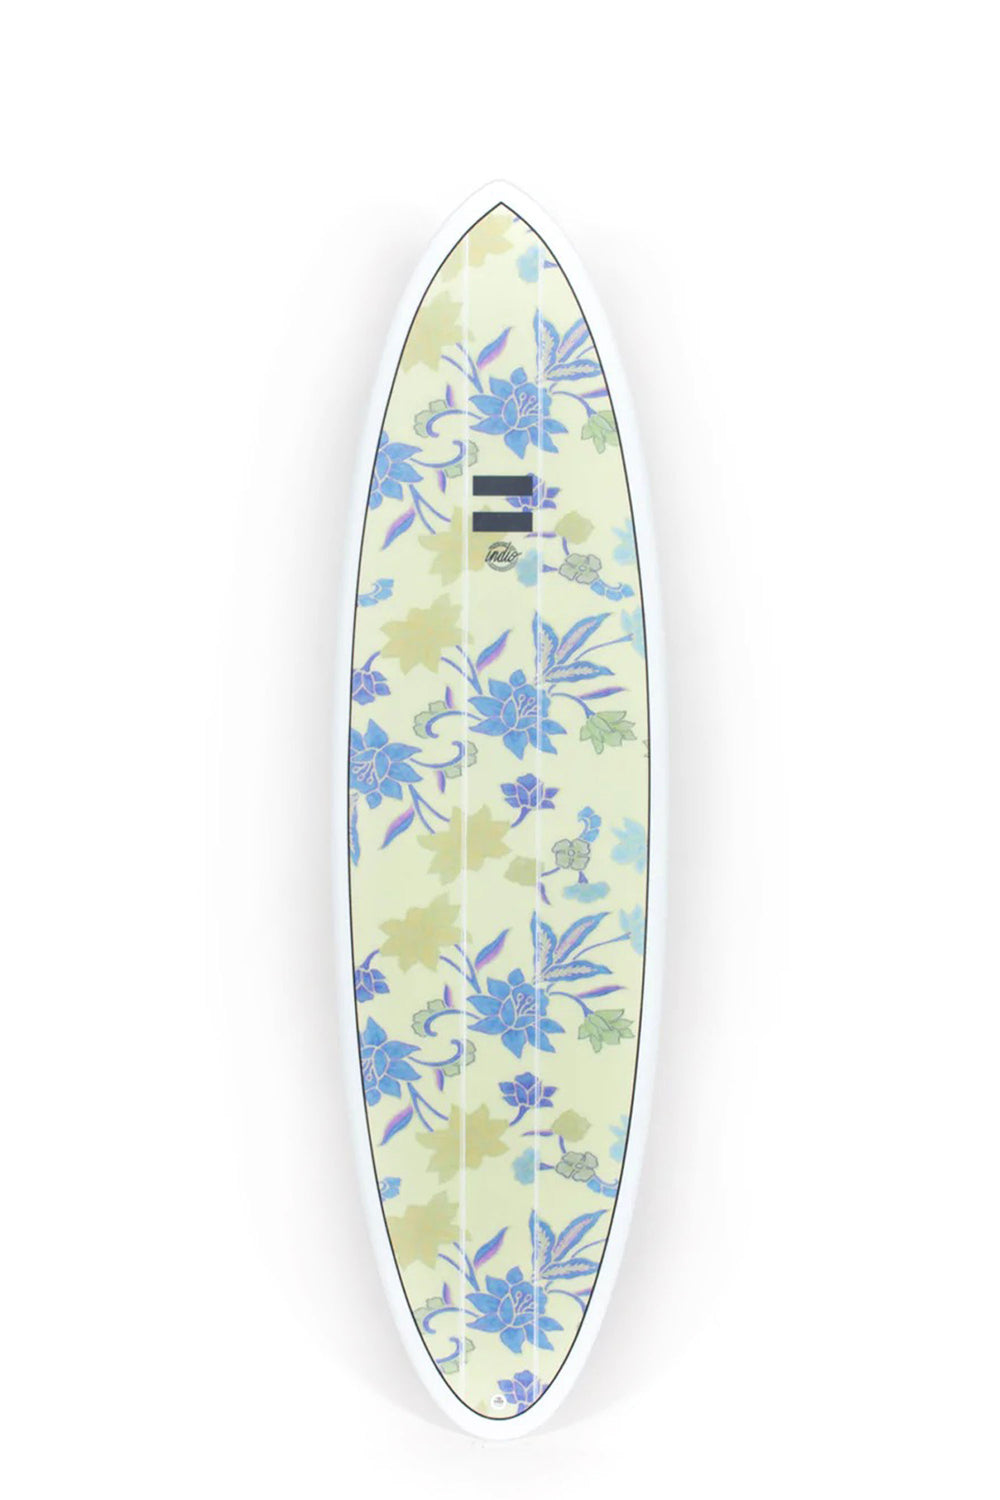 Pukas Surf Shop - Indio Endurance - THE EGG Flowers - 8'2